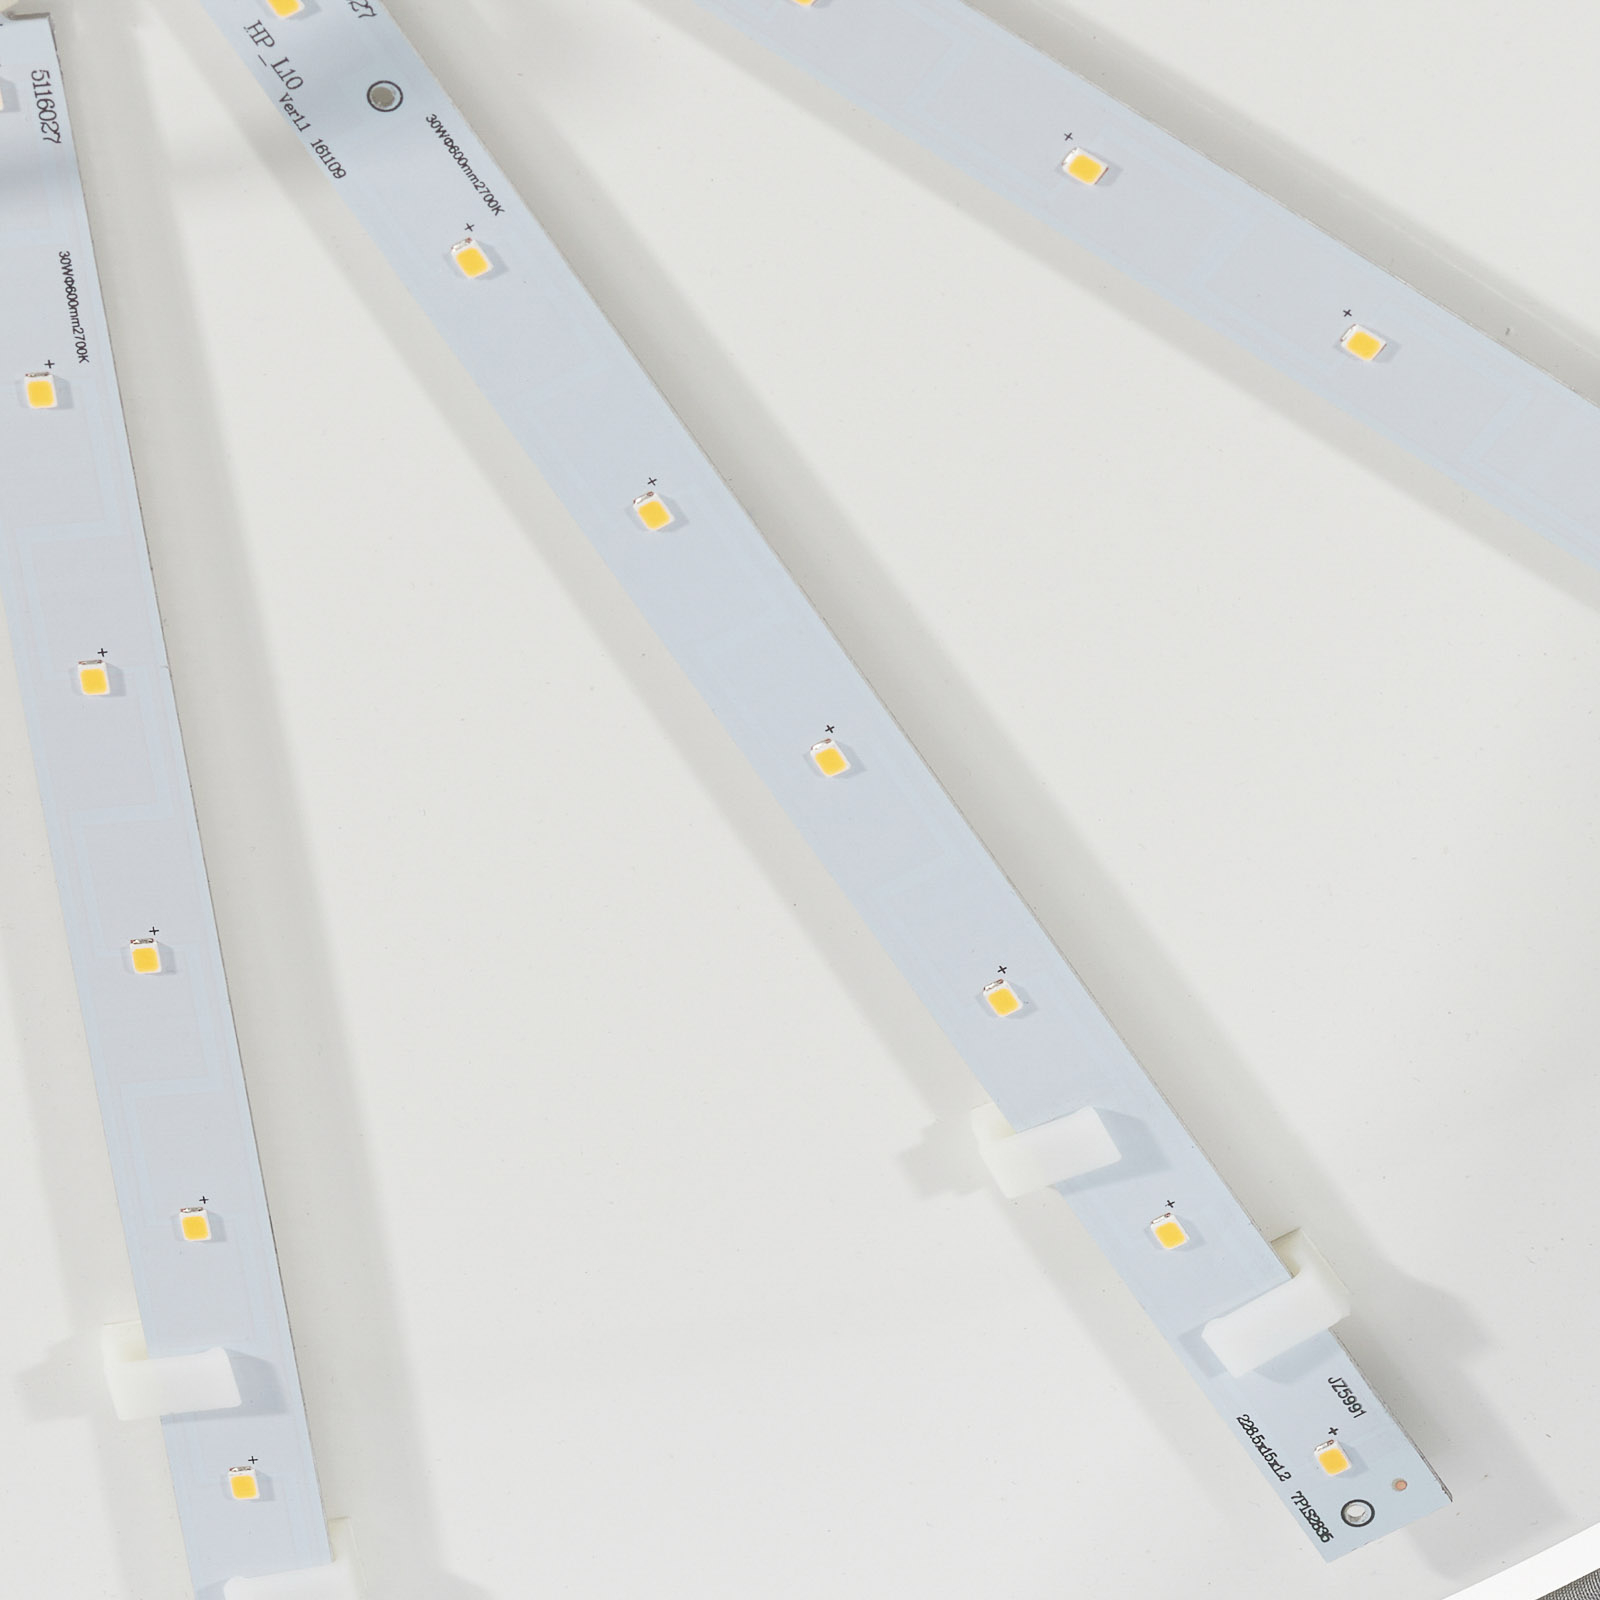 Aurelia - dimmable LED ceiling light